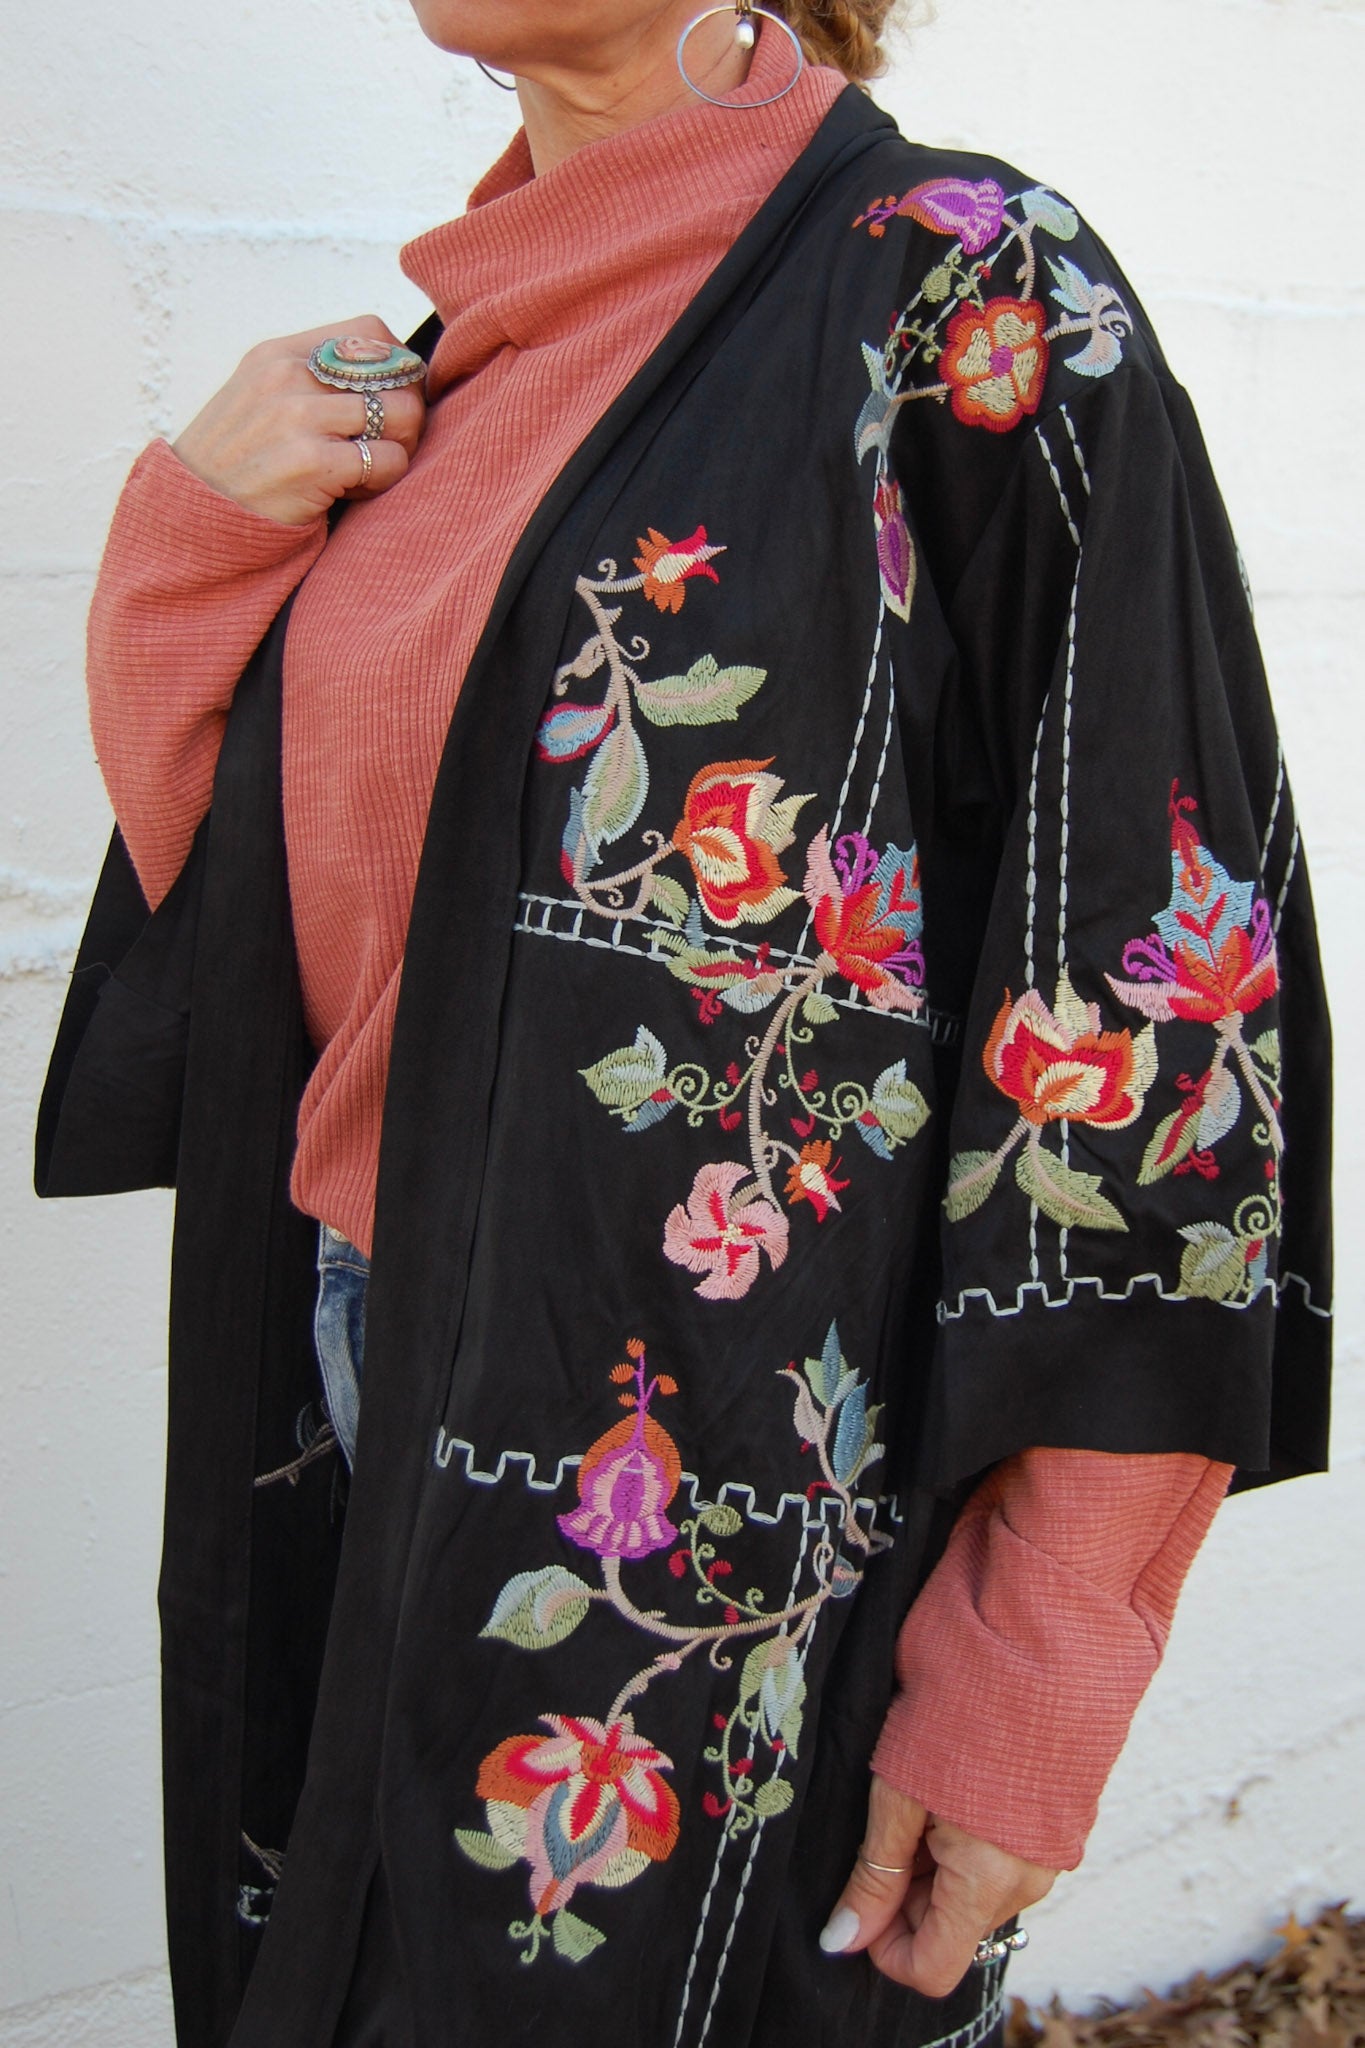 Load image into Gallery viewer, The Gina Suede Kimono in Black - SpiritedBoutiques Boho Hippie Boutique Style Kimono, BIZ
